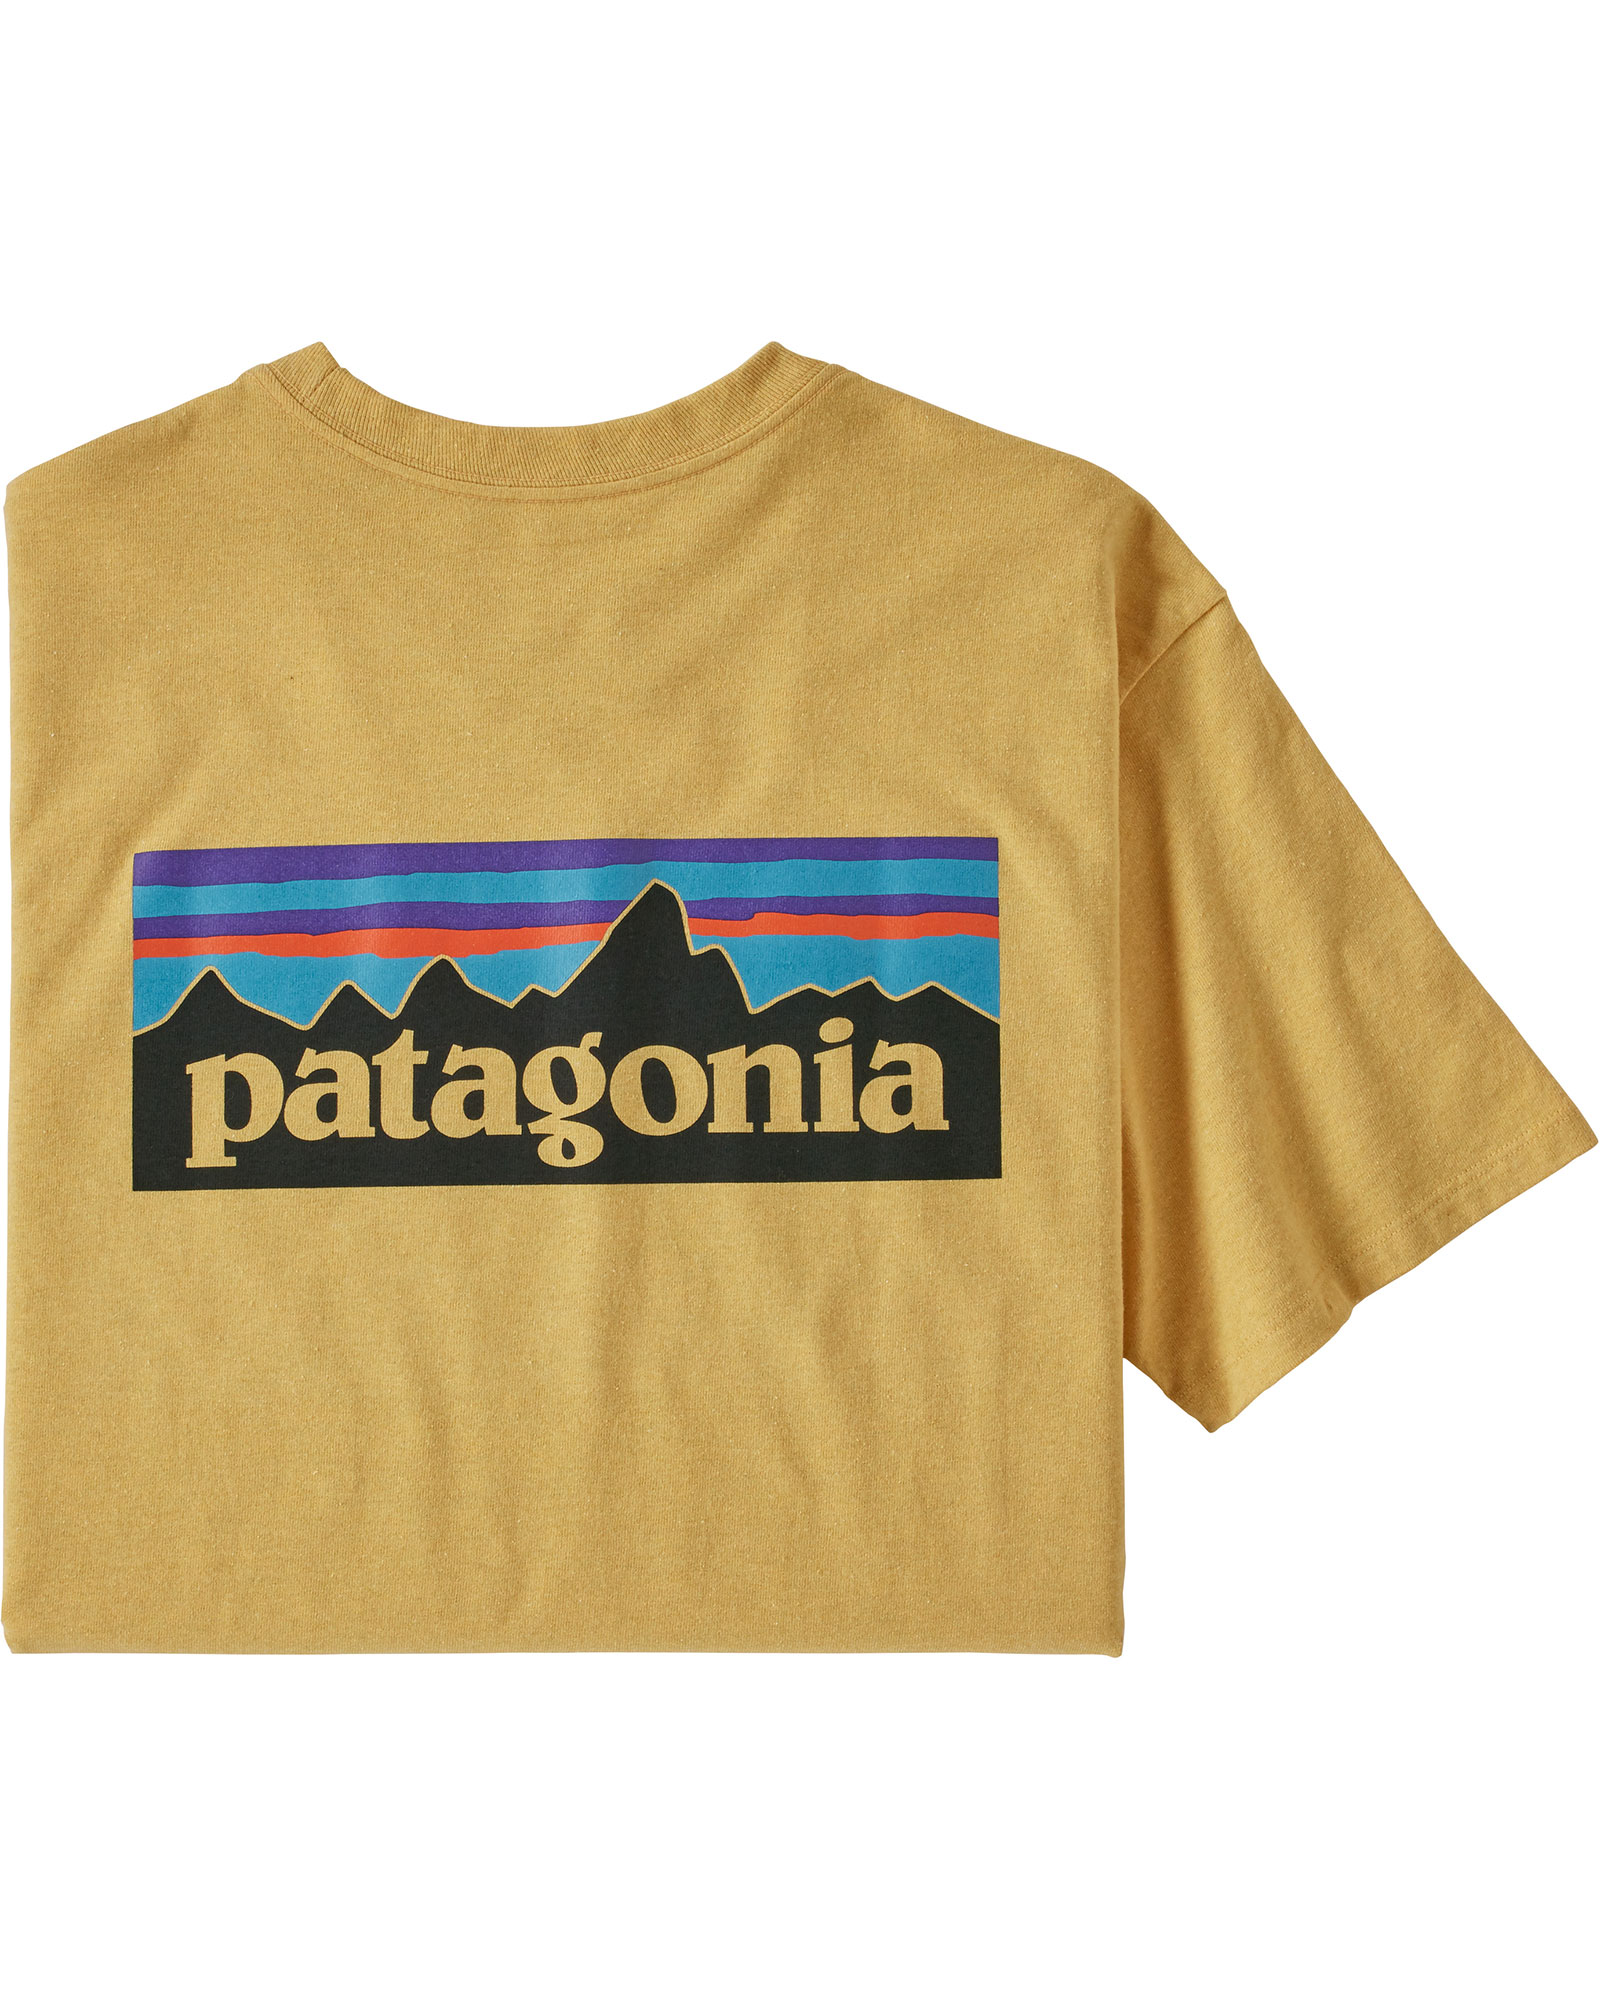 Patagonia P6 Logo Men’s Responsibili Tee - Surfboard Yellow L